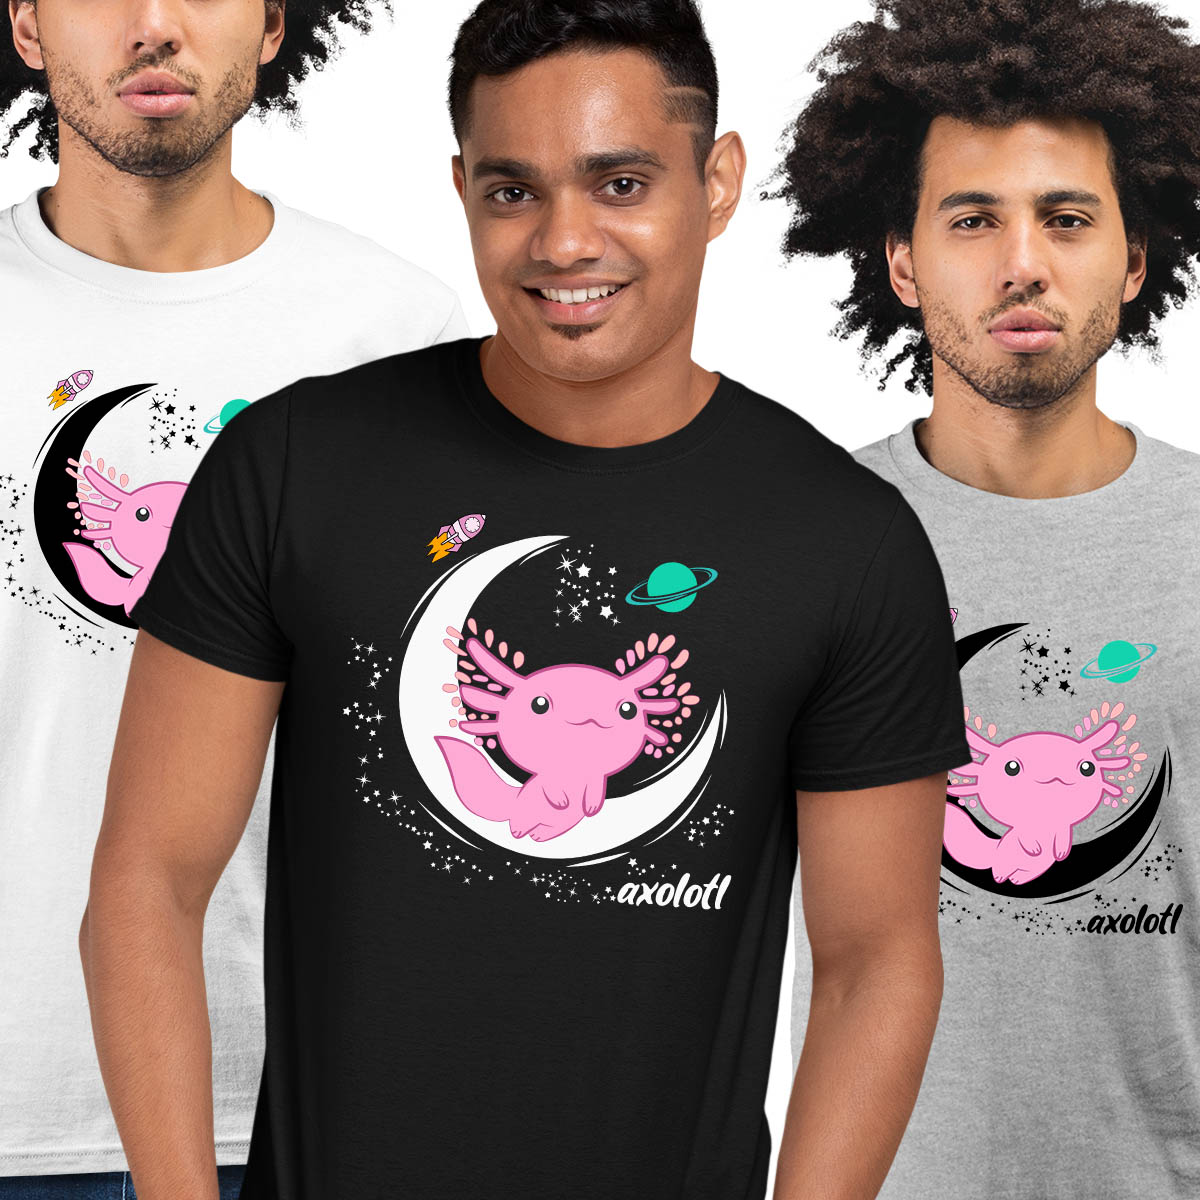 Space Axolotl Kawaii Pastel Goth Japan Anime Comic Adult Unisex Black T-shirt